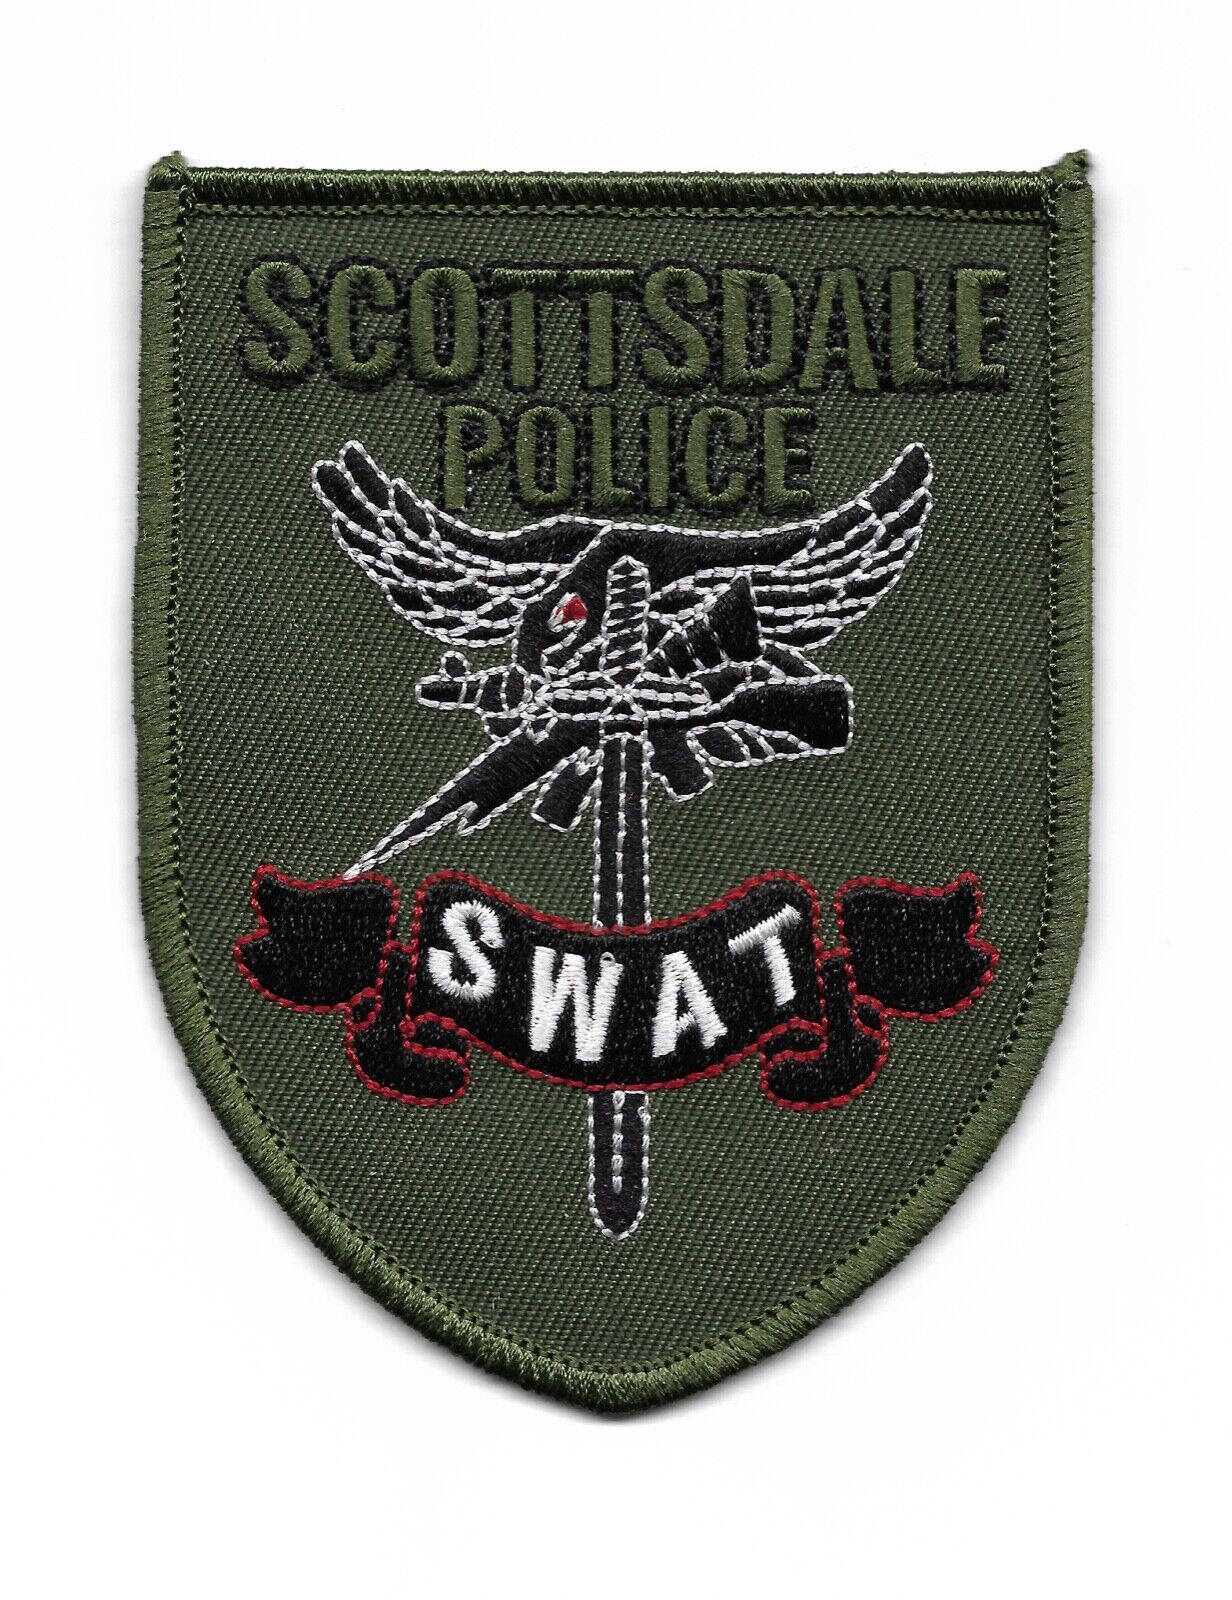 Scottsdale, Arizona subdued SWAT police patch